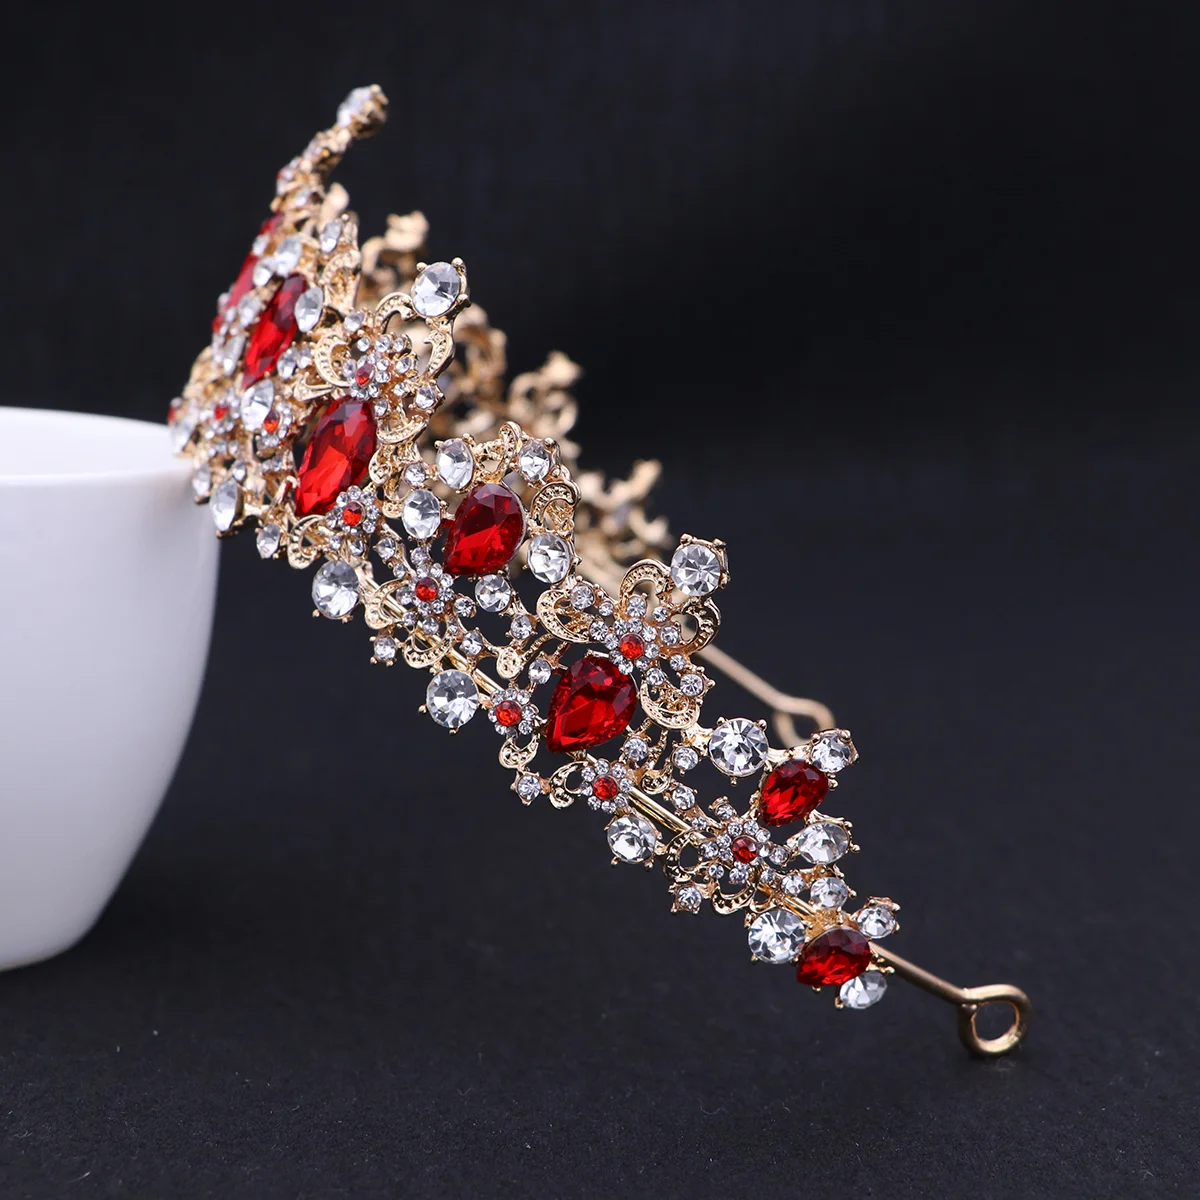 

Baroque Wedding Crowns Royal Tiara Bride Tiaras Bridal Headband Headpieces Hair Accessories for Red